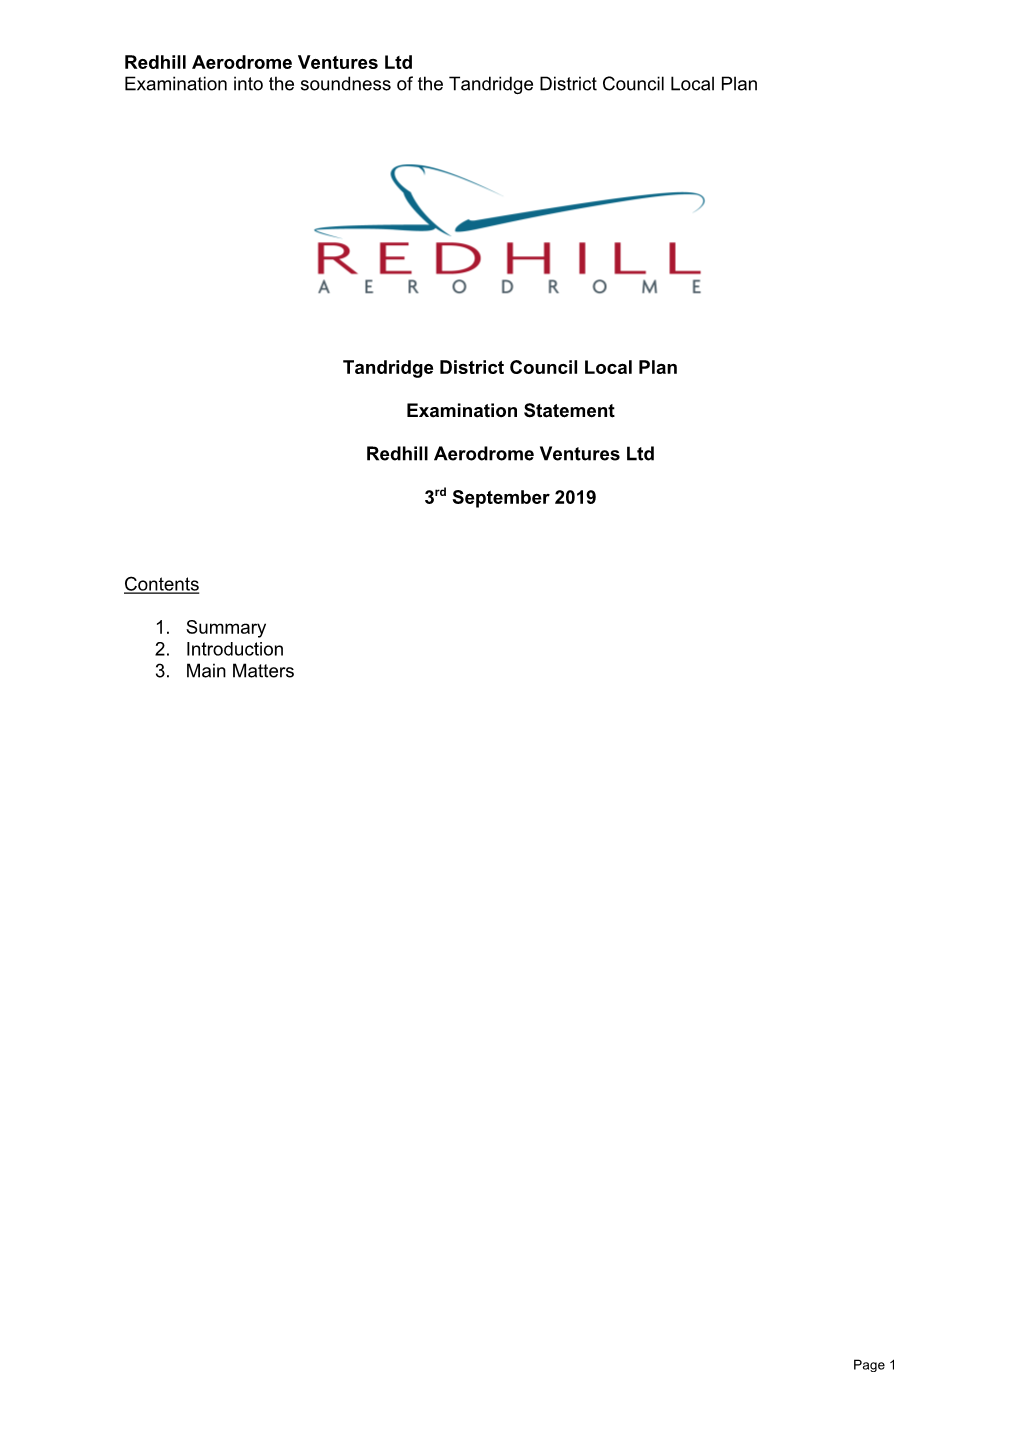 Redhill Aerodrome Ventures Ltd Examination Into the Soundness of the Tandridge District Council Local Plan